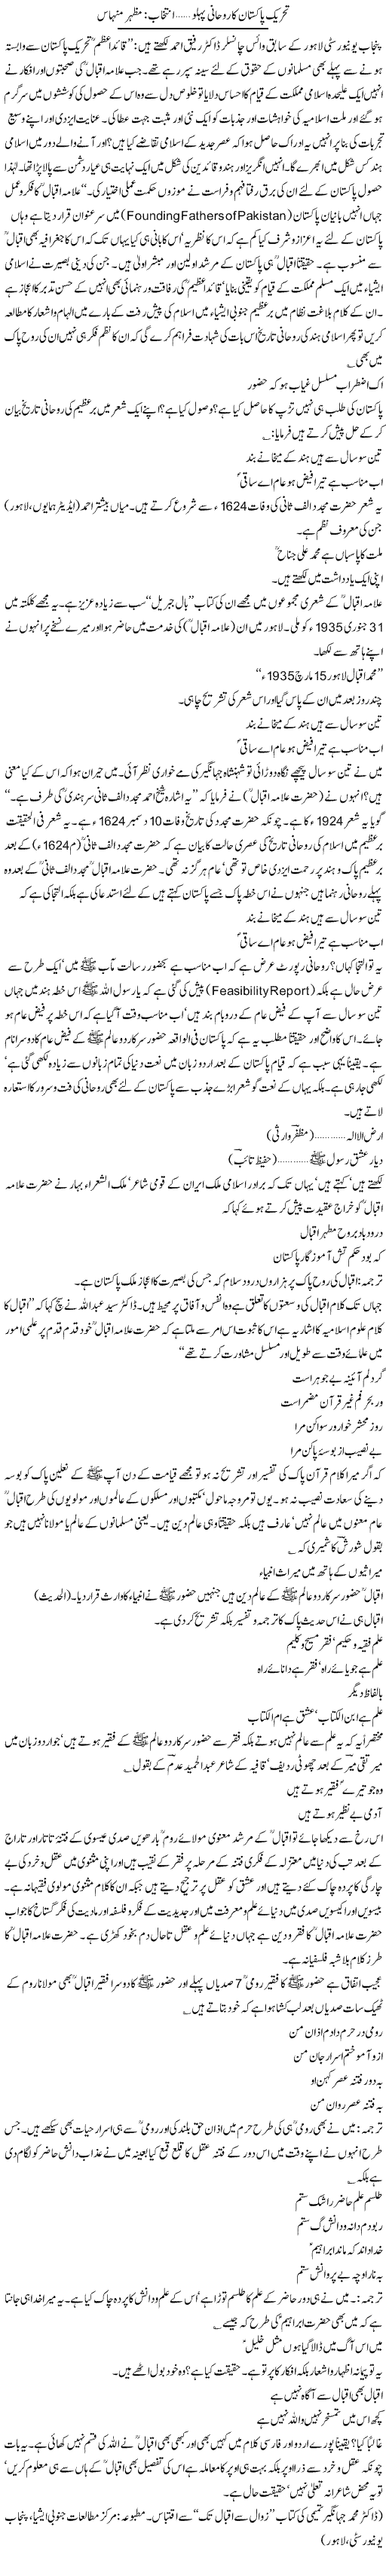 Tehrik Pakistan Ka Ruhani Pehlu | Mazhar Minhas | Daily Urdu Columns